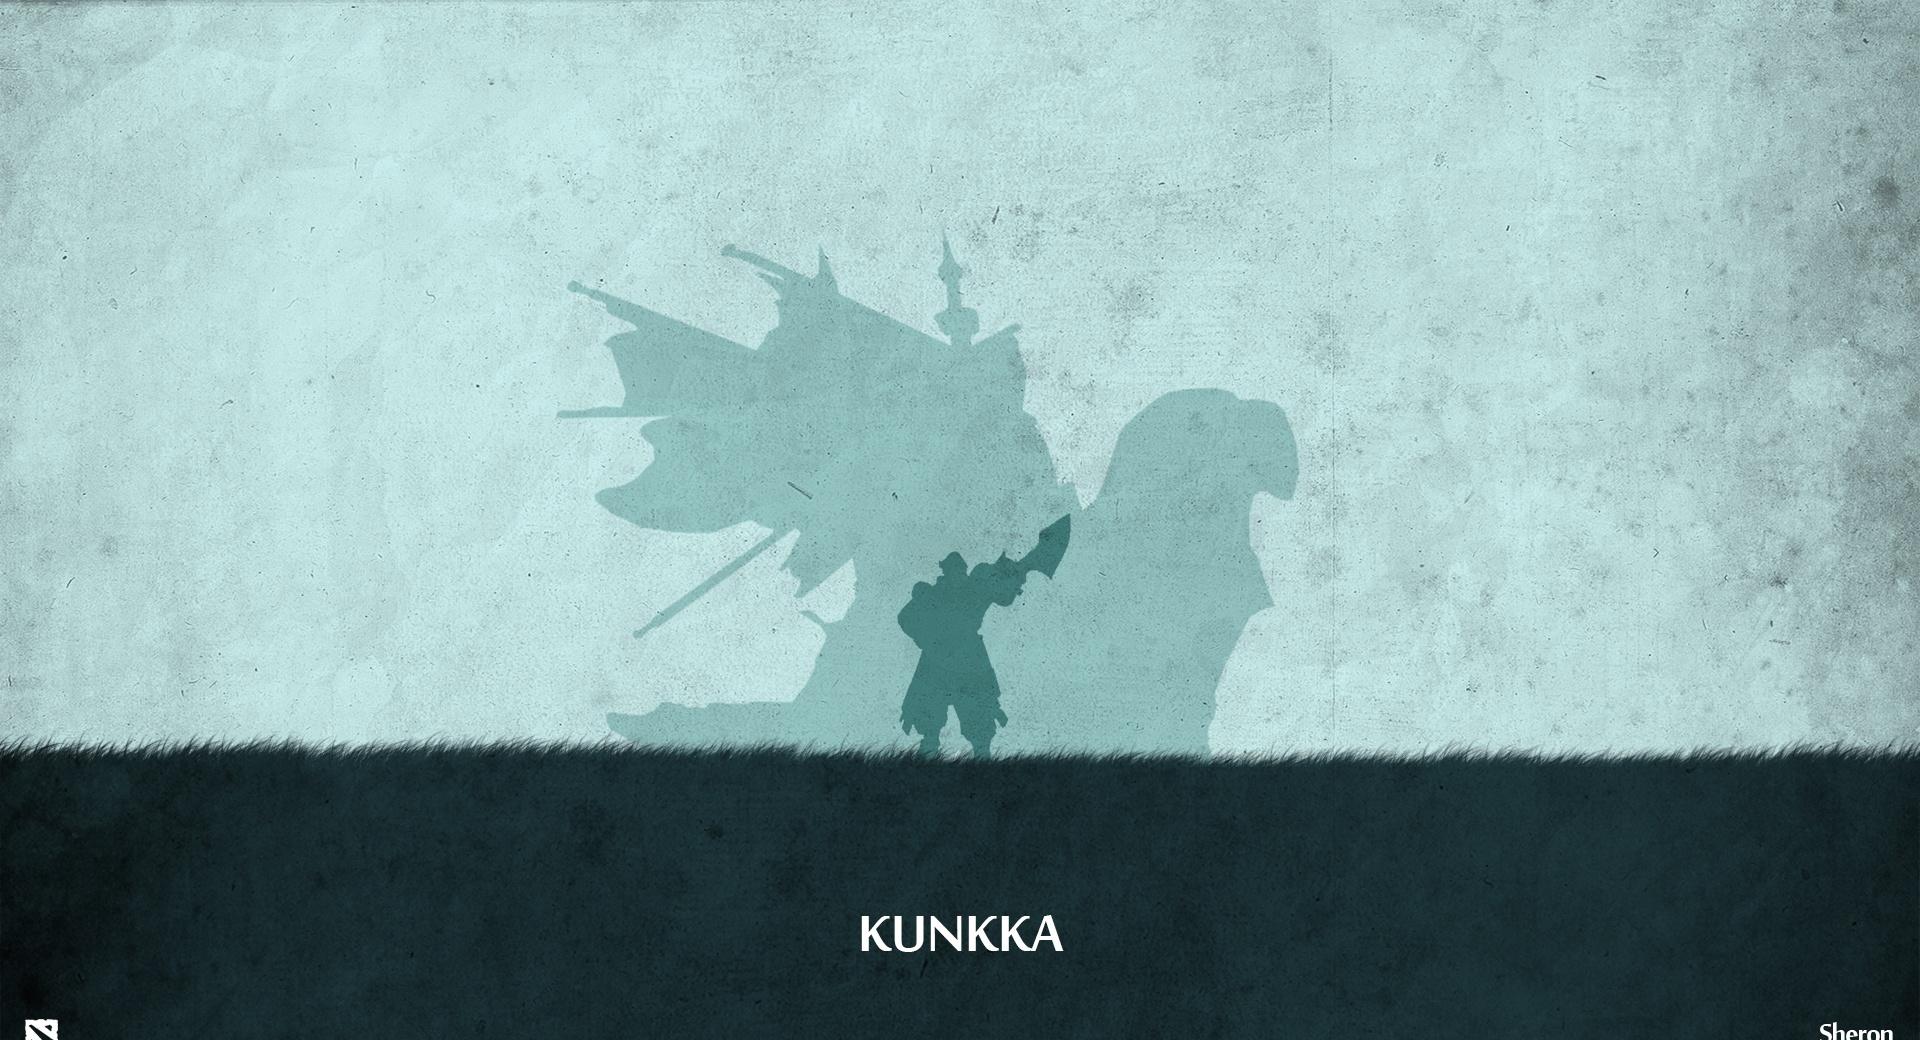 Kunkka - DotA 2 at 1600 x 1200 size wallpapers HD quality